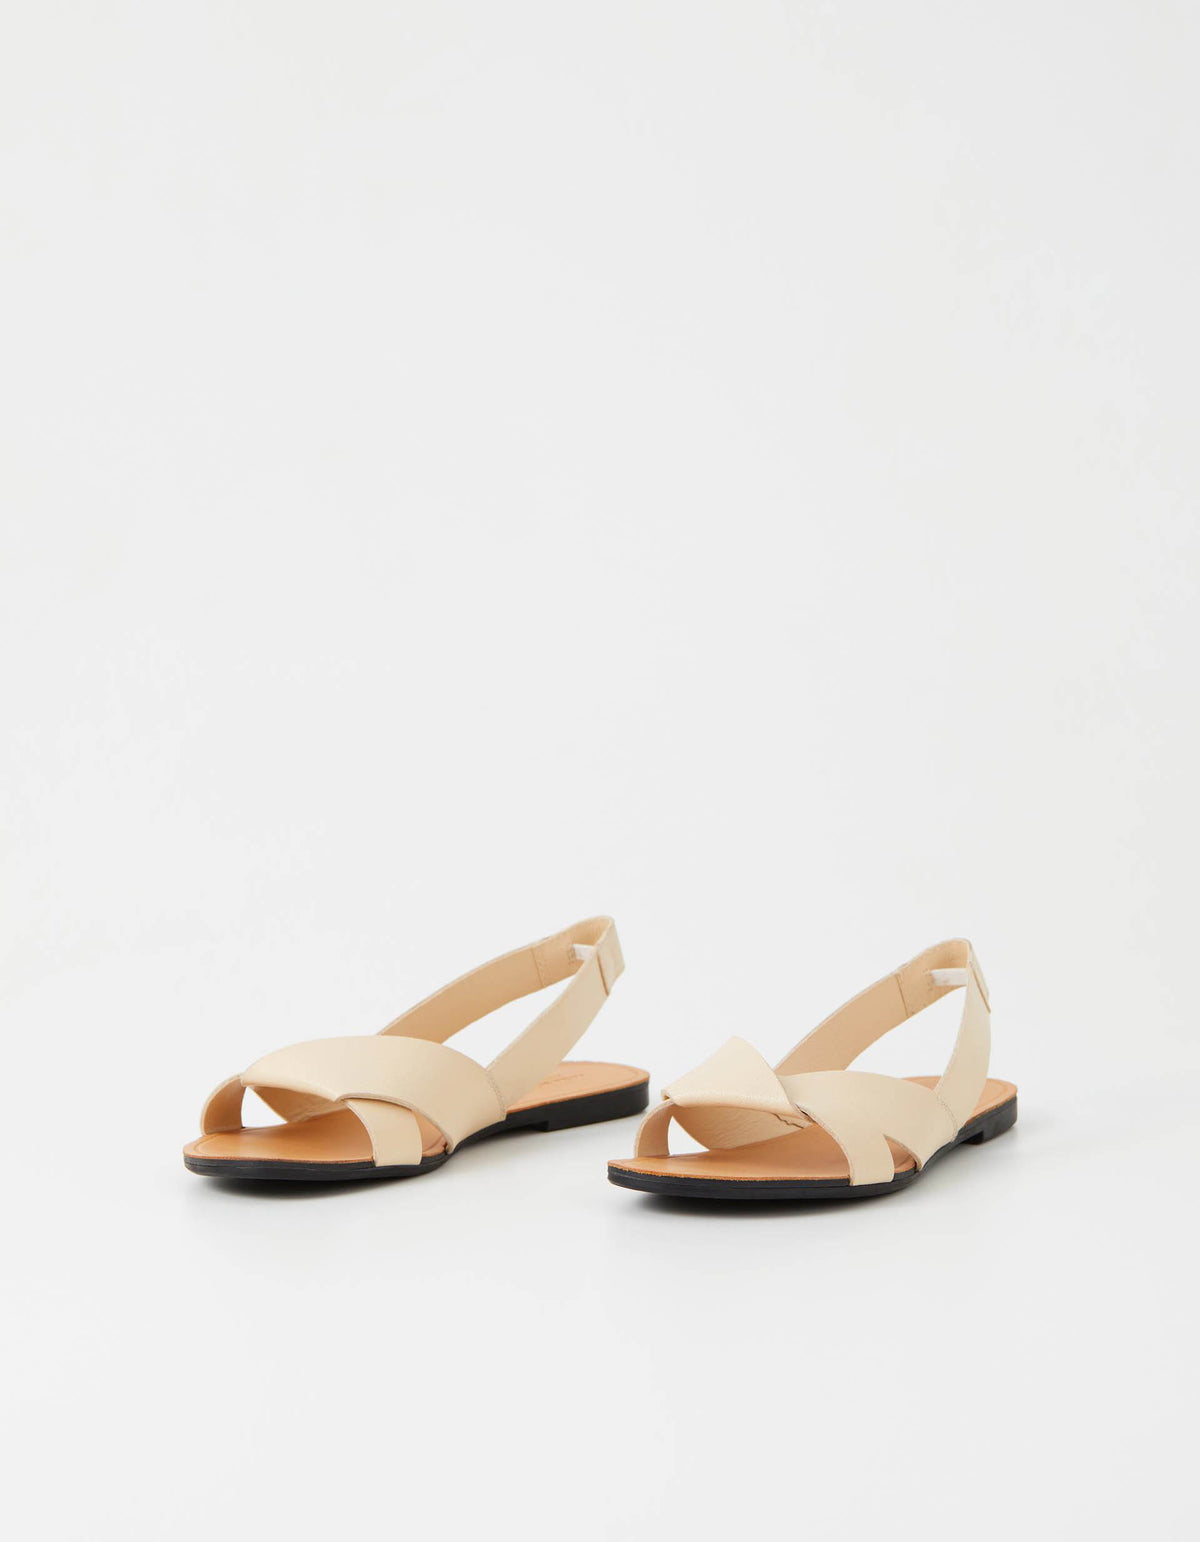 Sandal in Off White | Penelope's